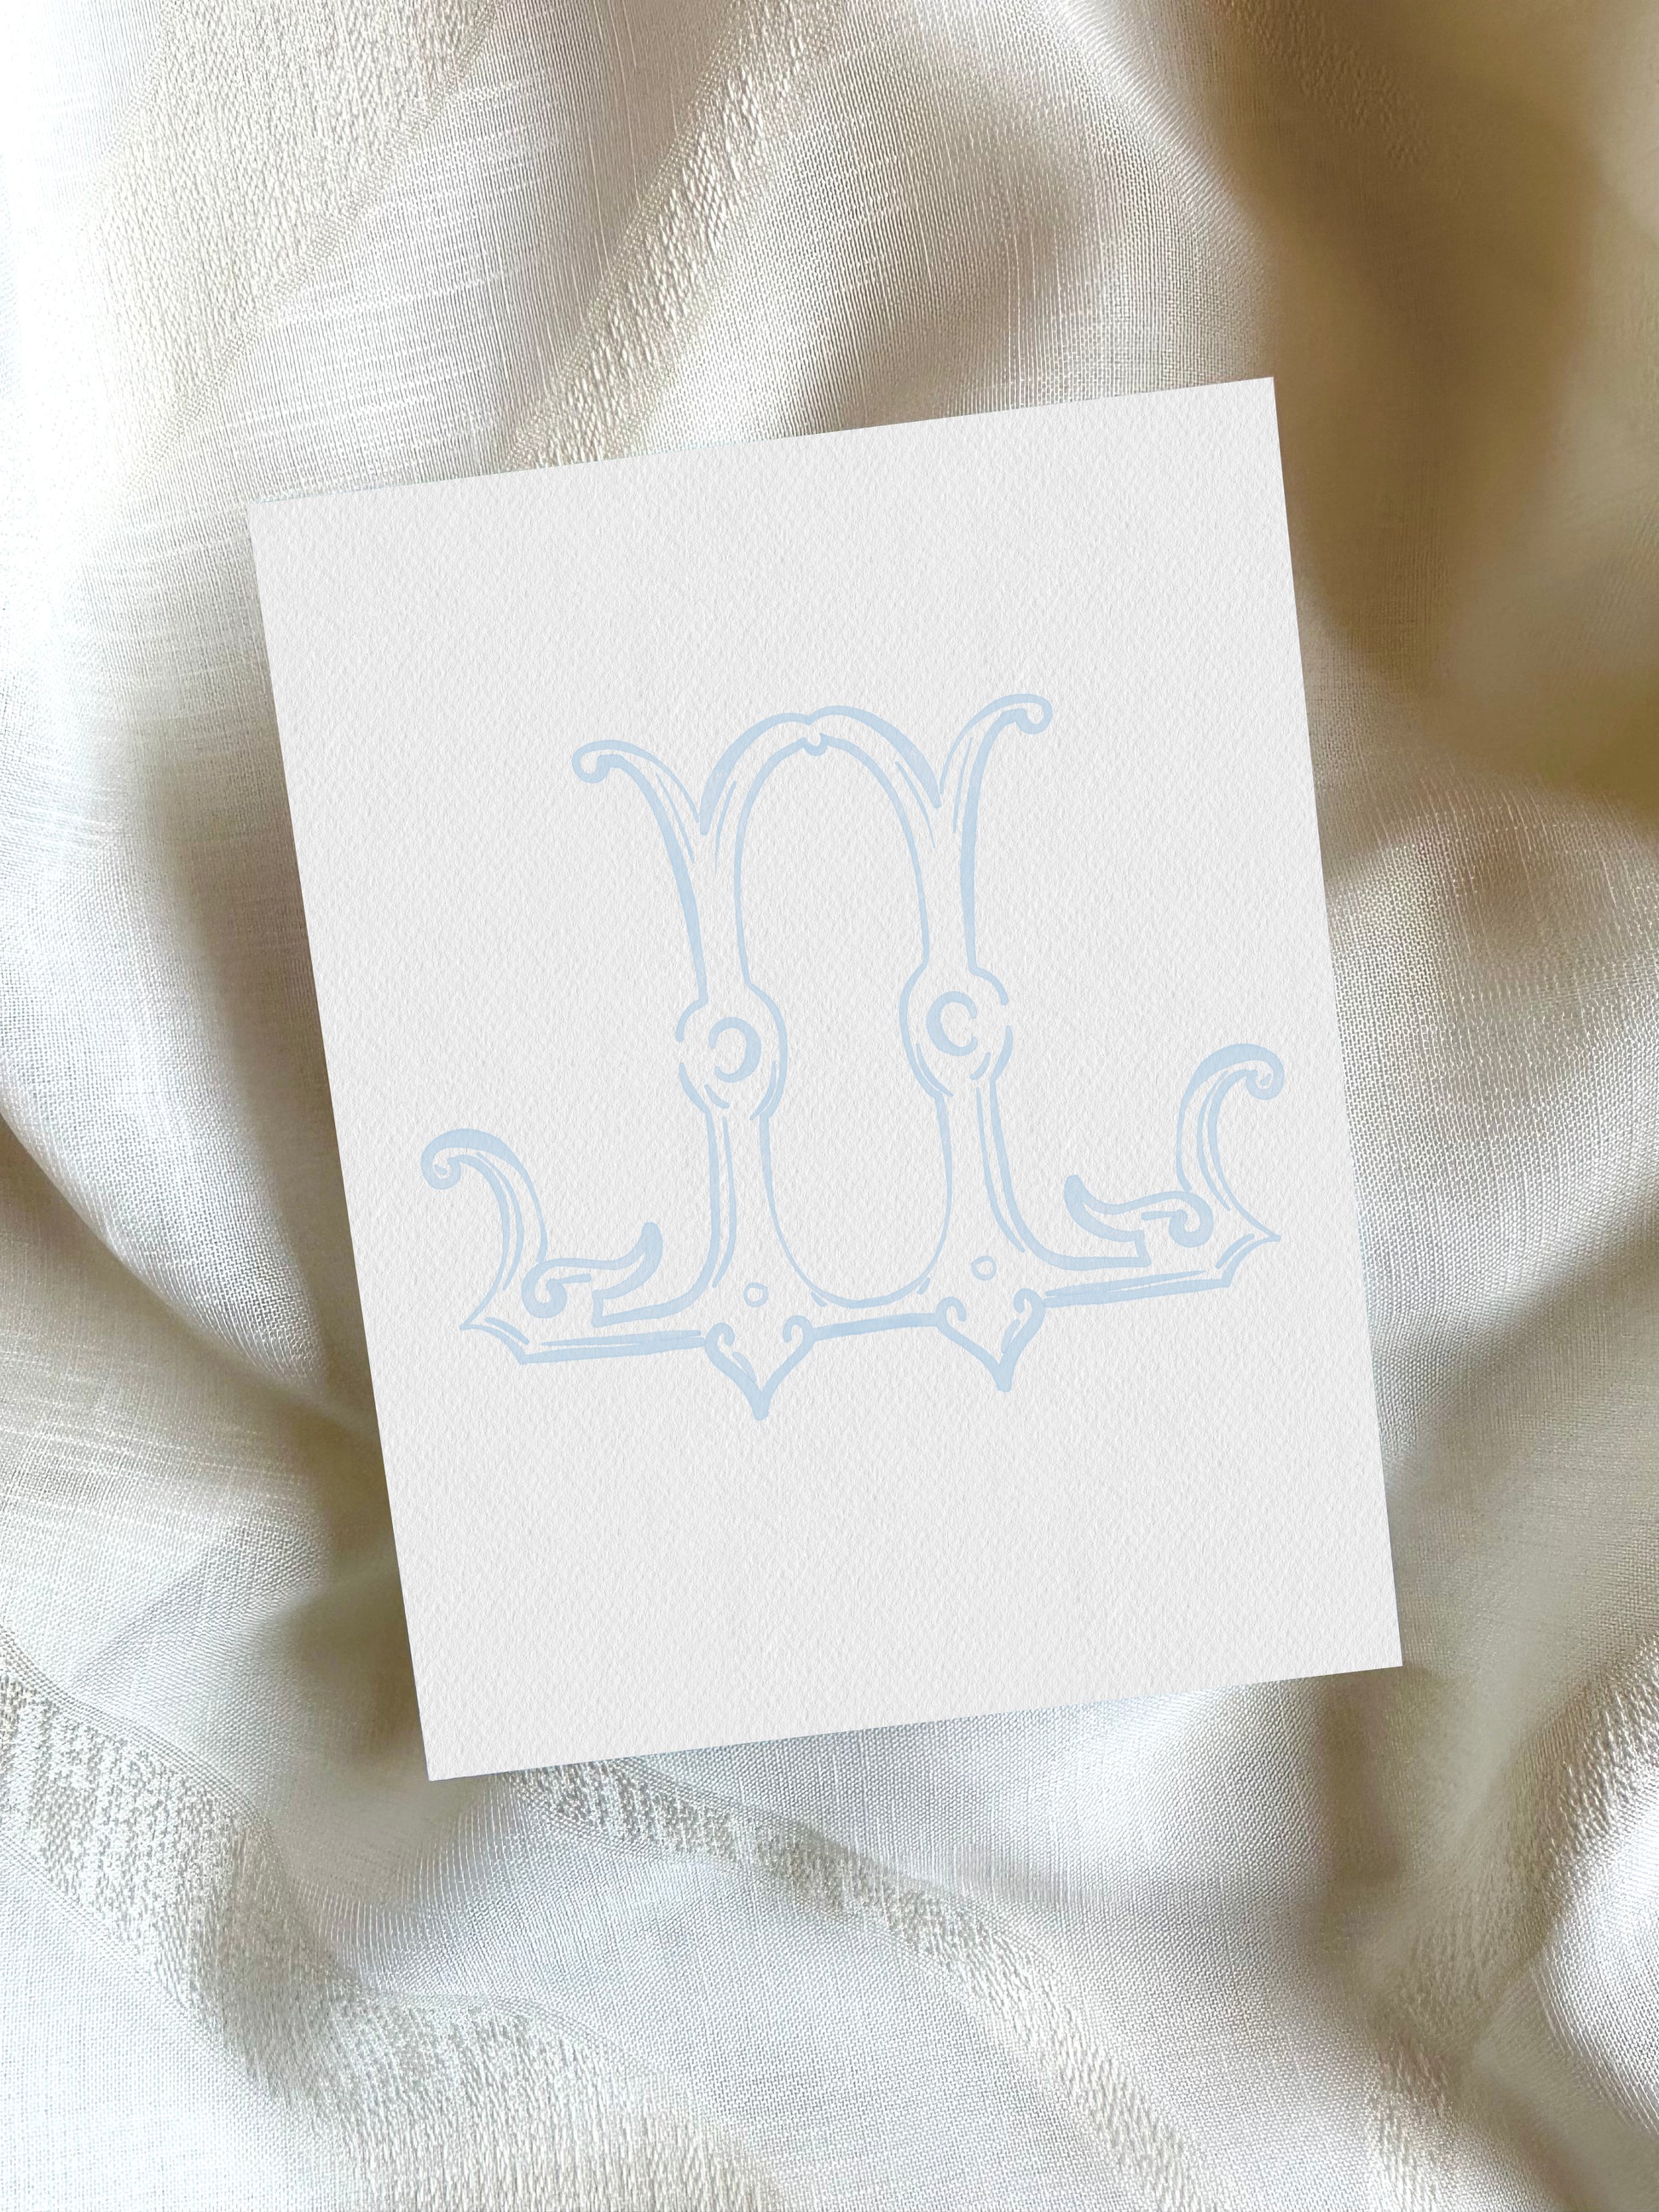 2 Letter Monogram with Letters LL | Digital Download - Wedding Monogram SVG, Personal Logo, Wedding Logo for Wedding Invitations The Wedding Crest Lab